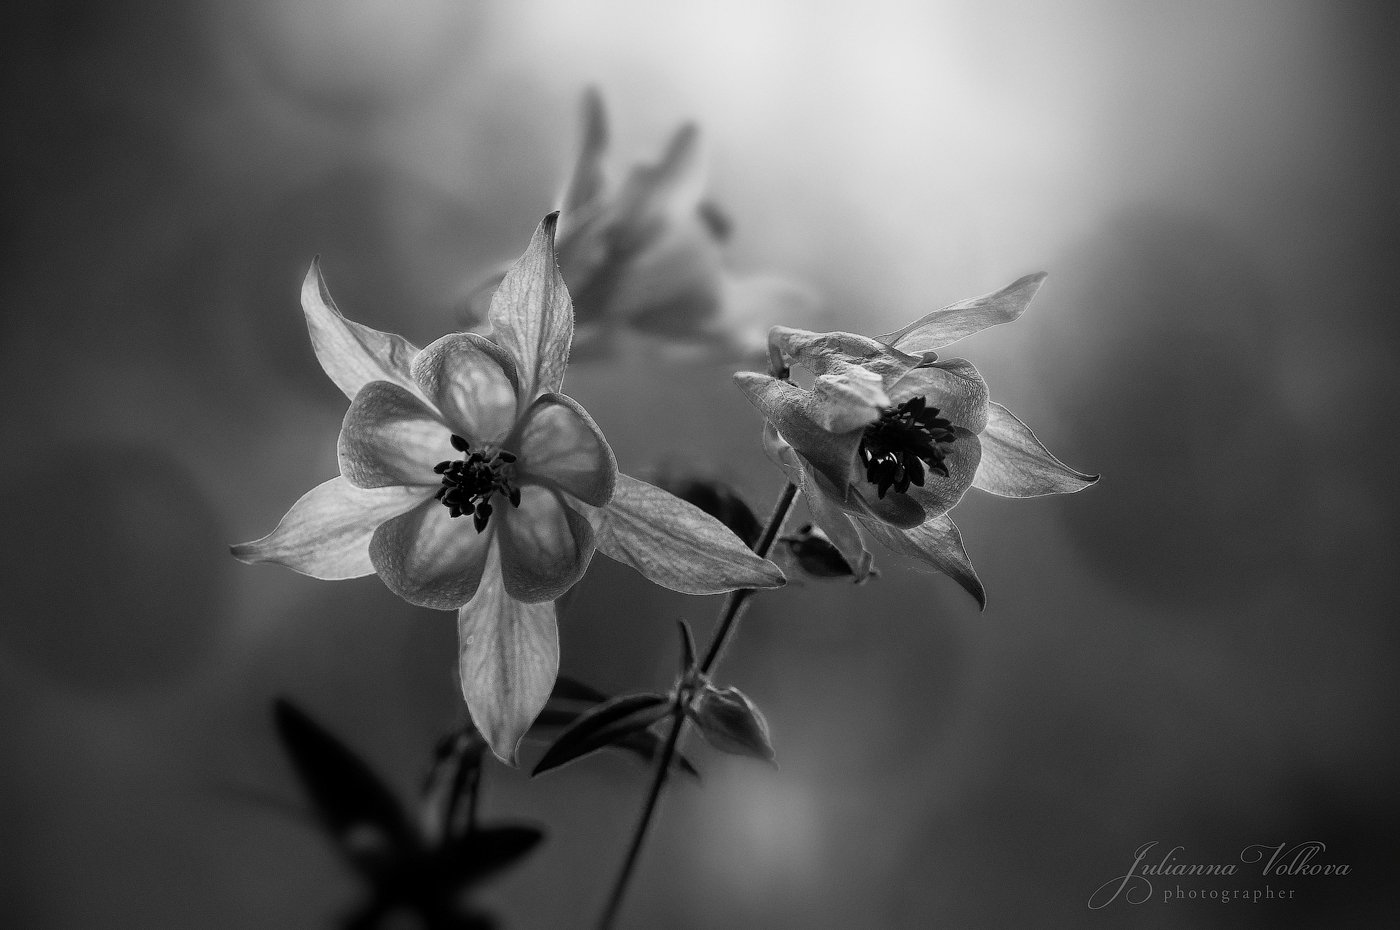 цветок, макро, черно-белое фото, аквилегия, водосбор, Волкова Юлианна